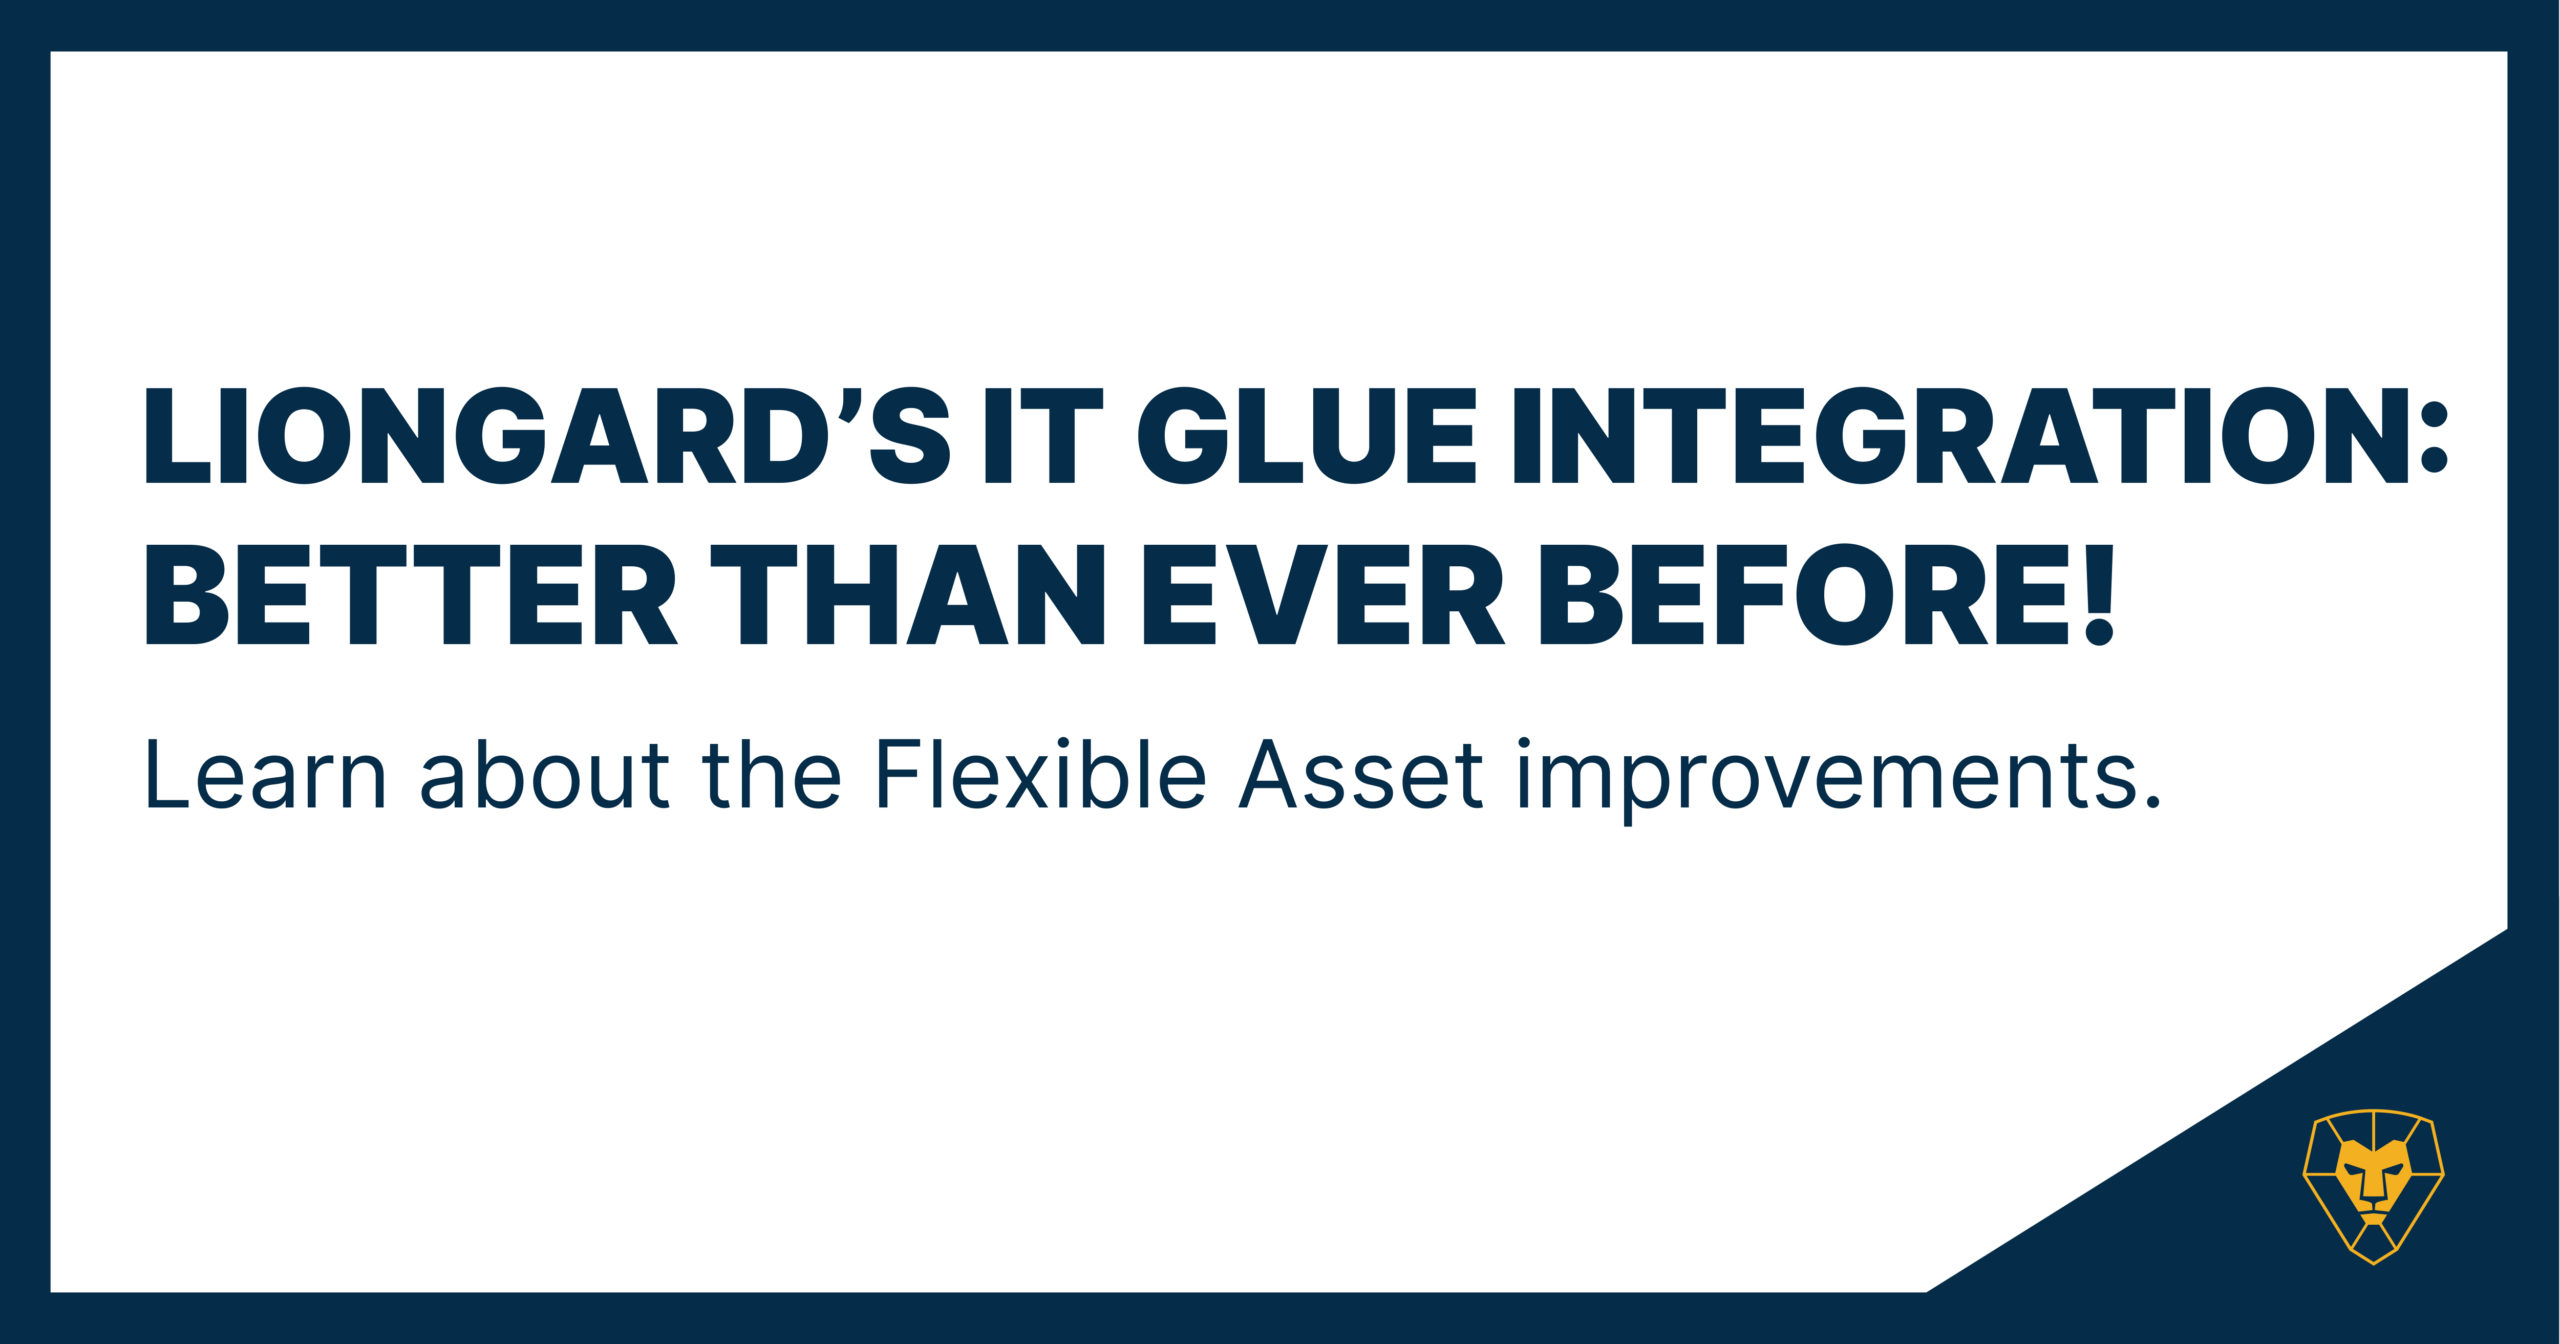 IT Glue Improvements to Flexible Assets